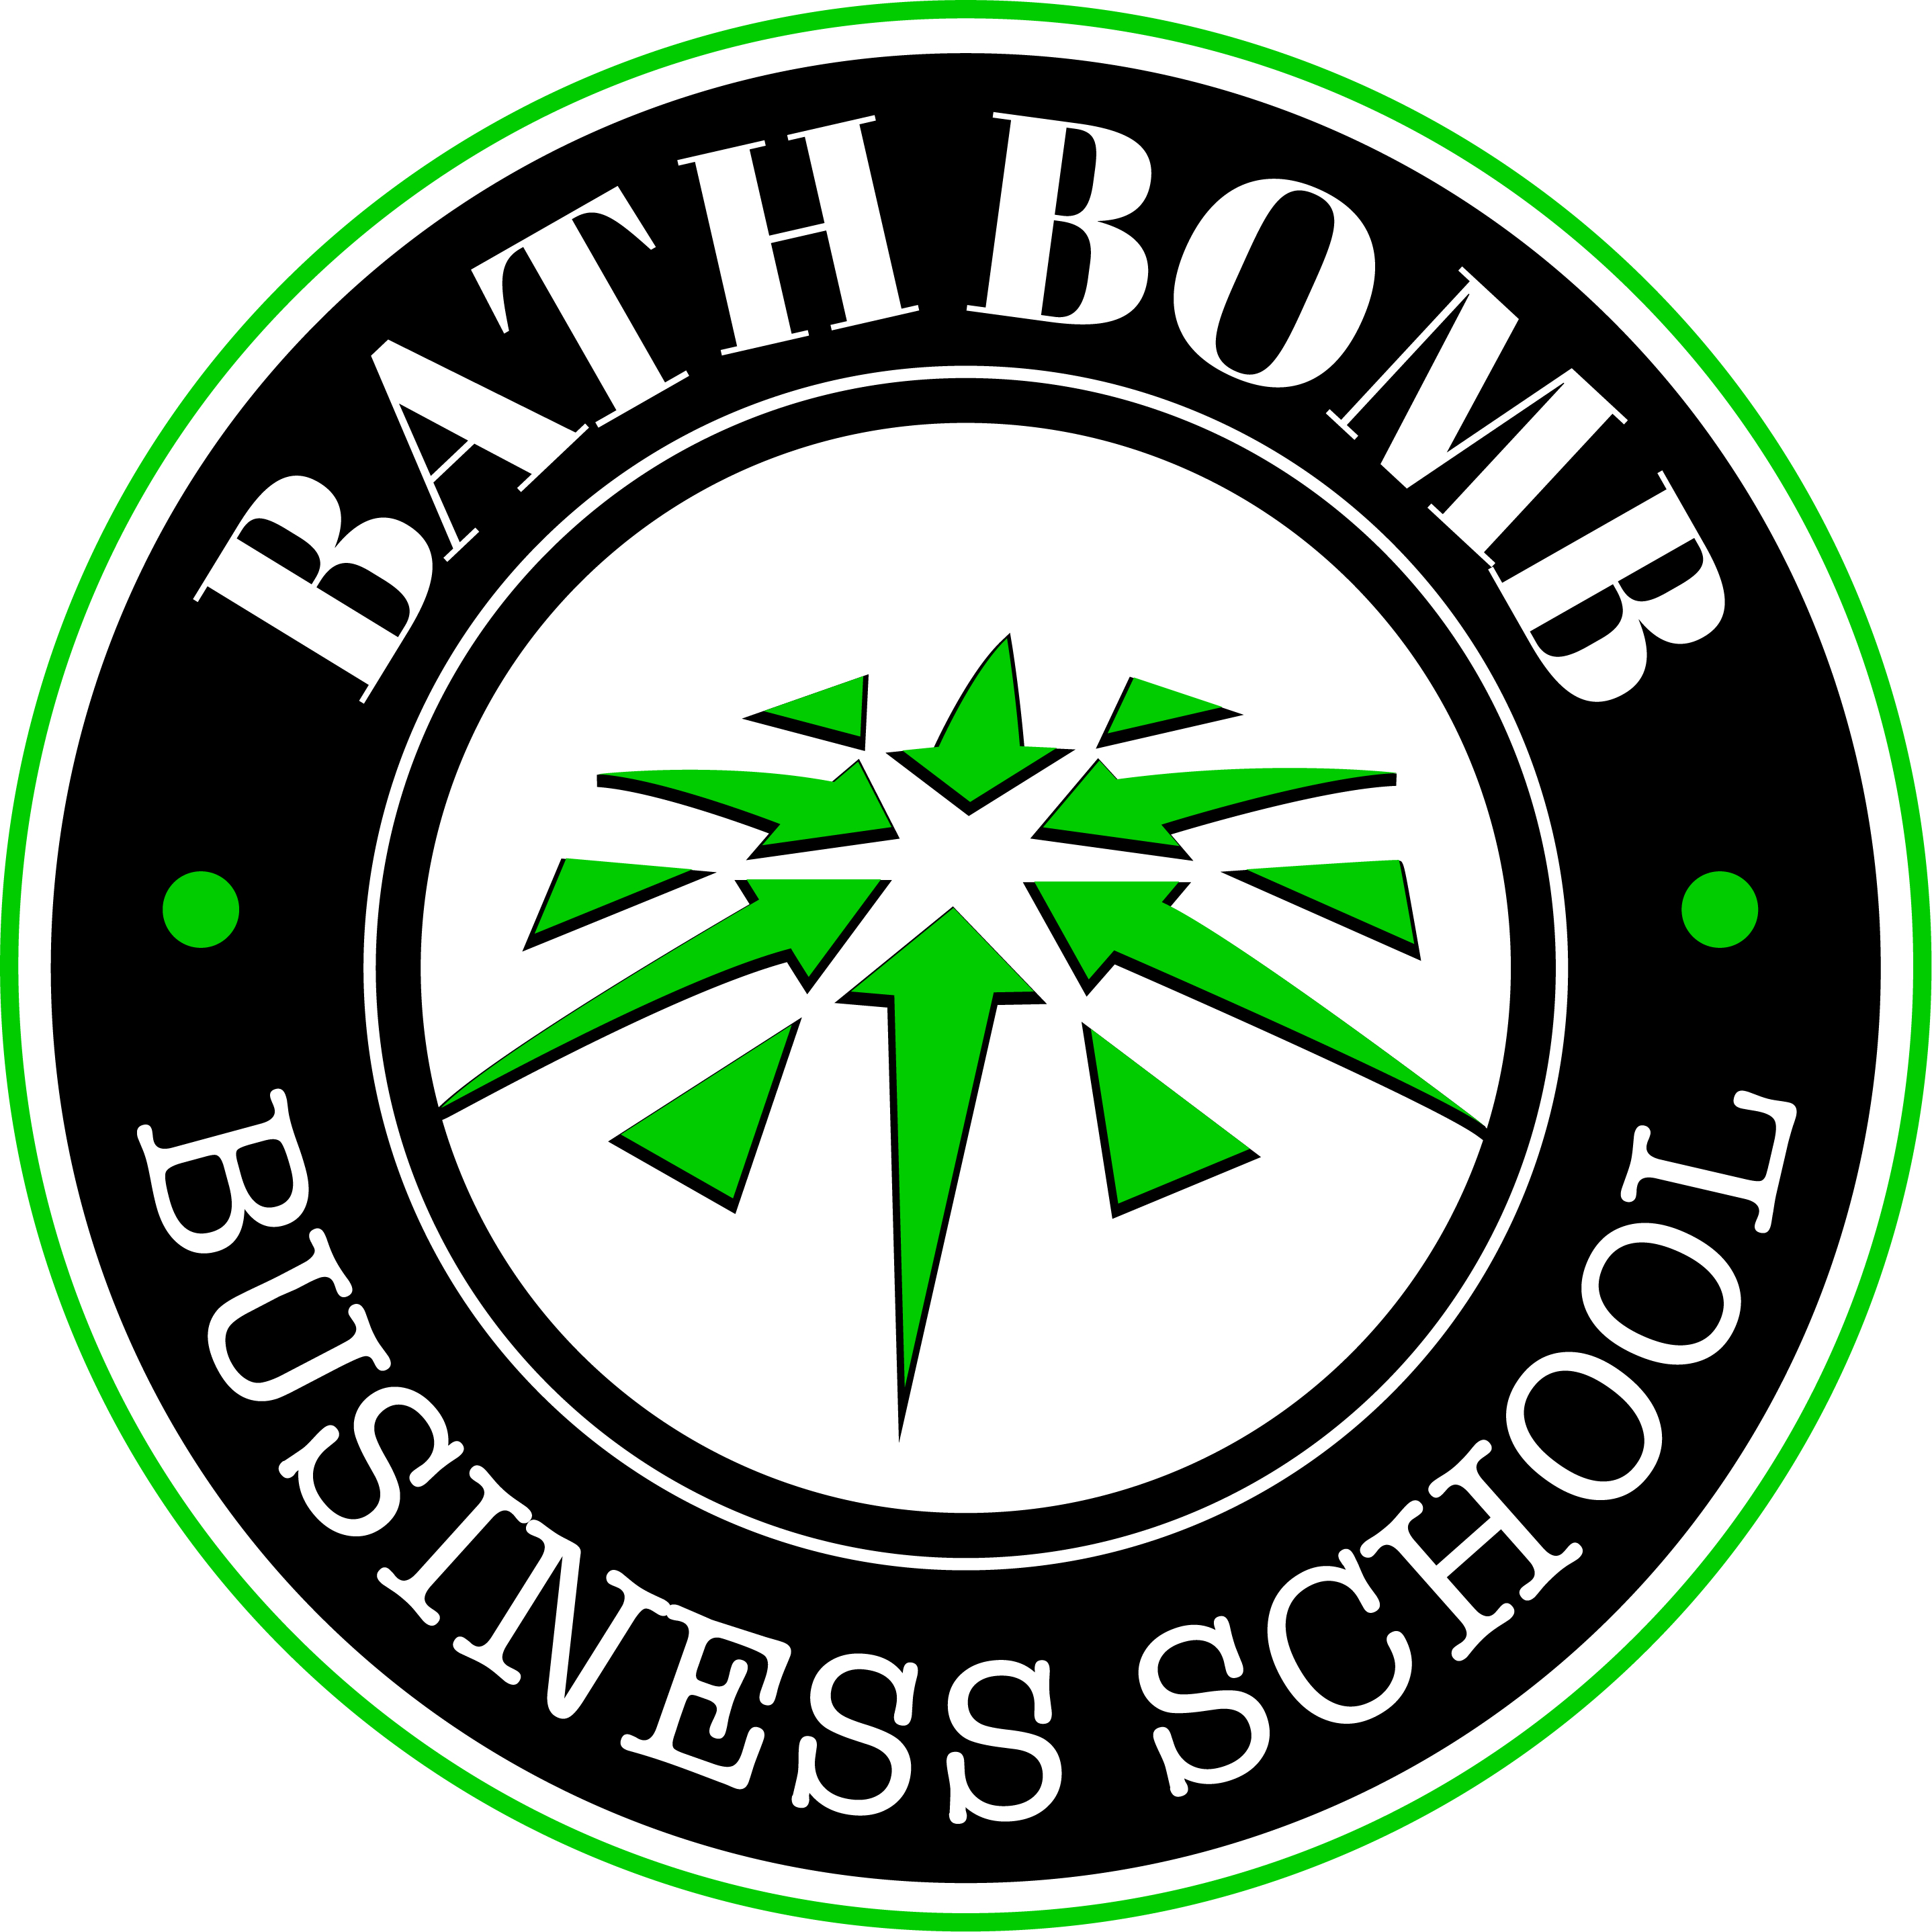 Bath Bomb Business School FINAL LOGO.jpg